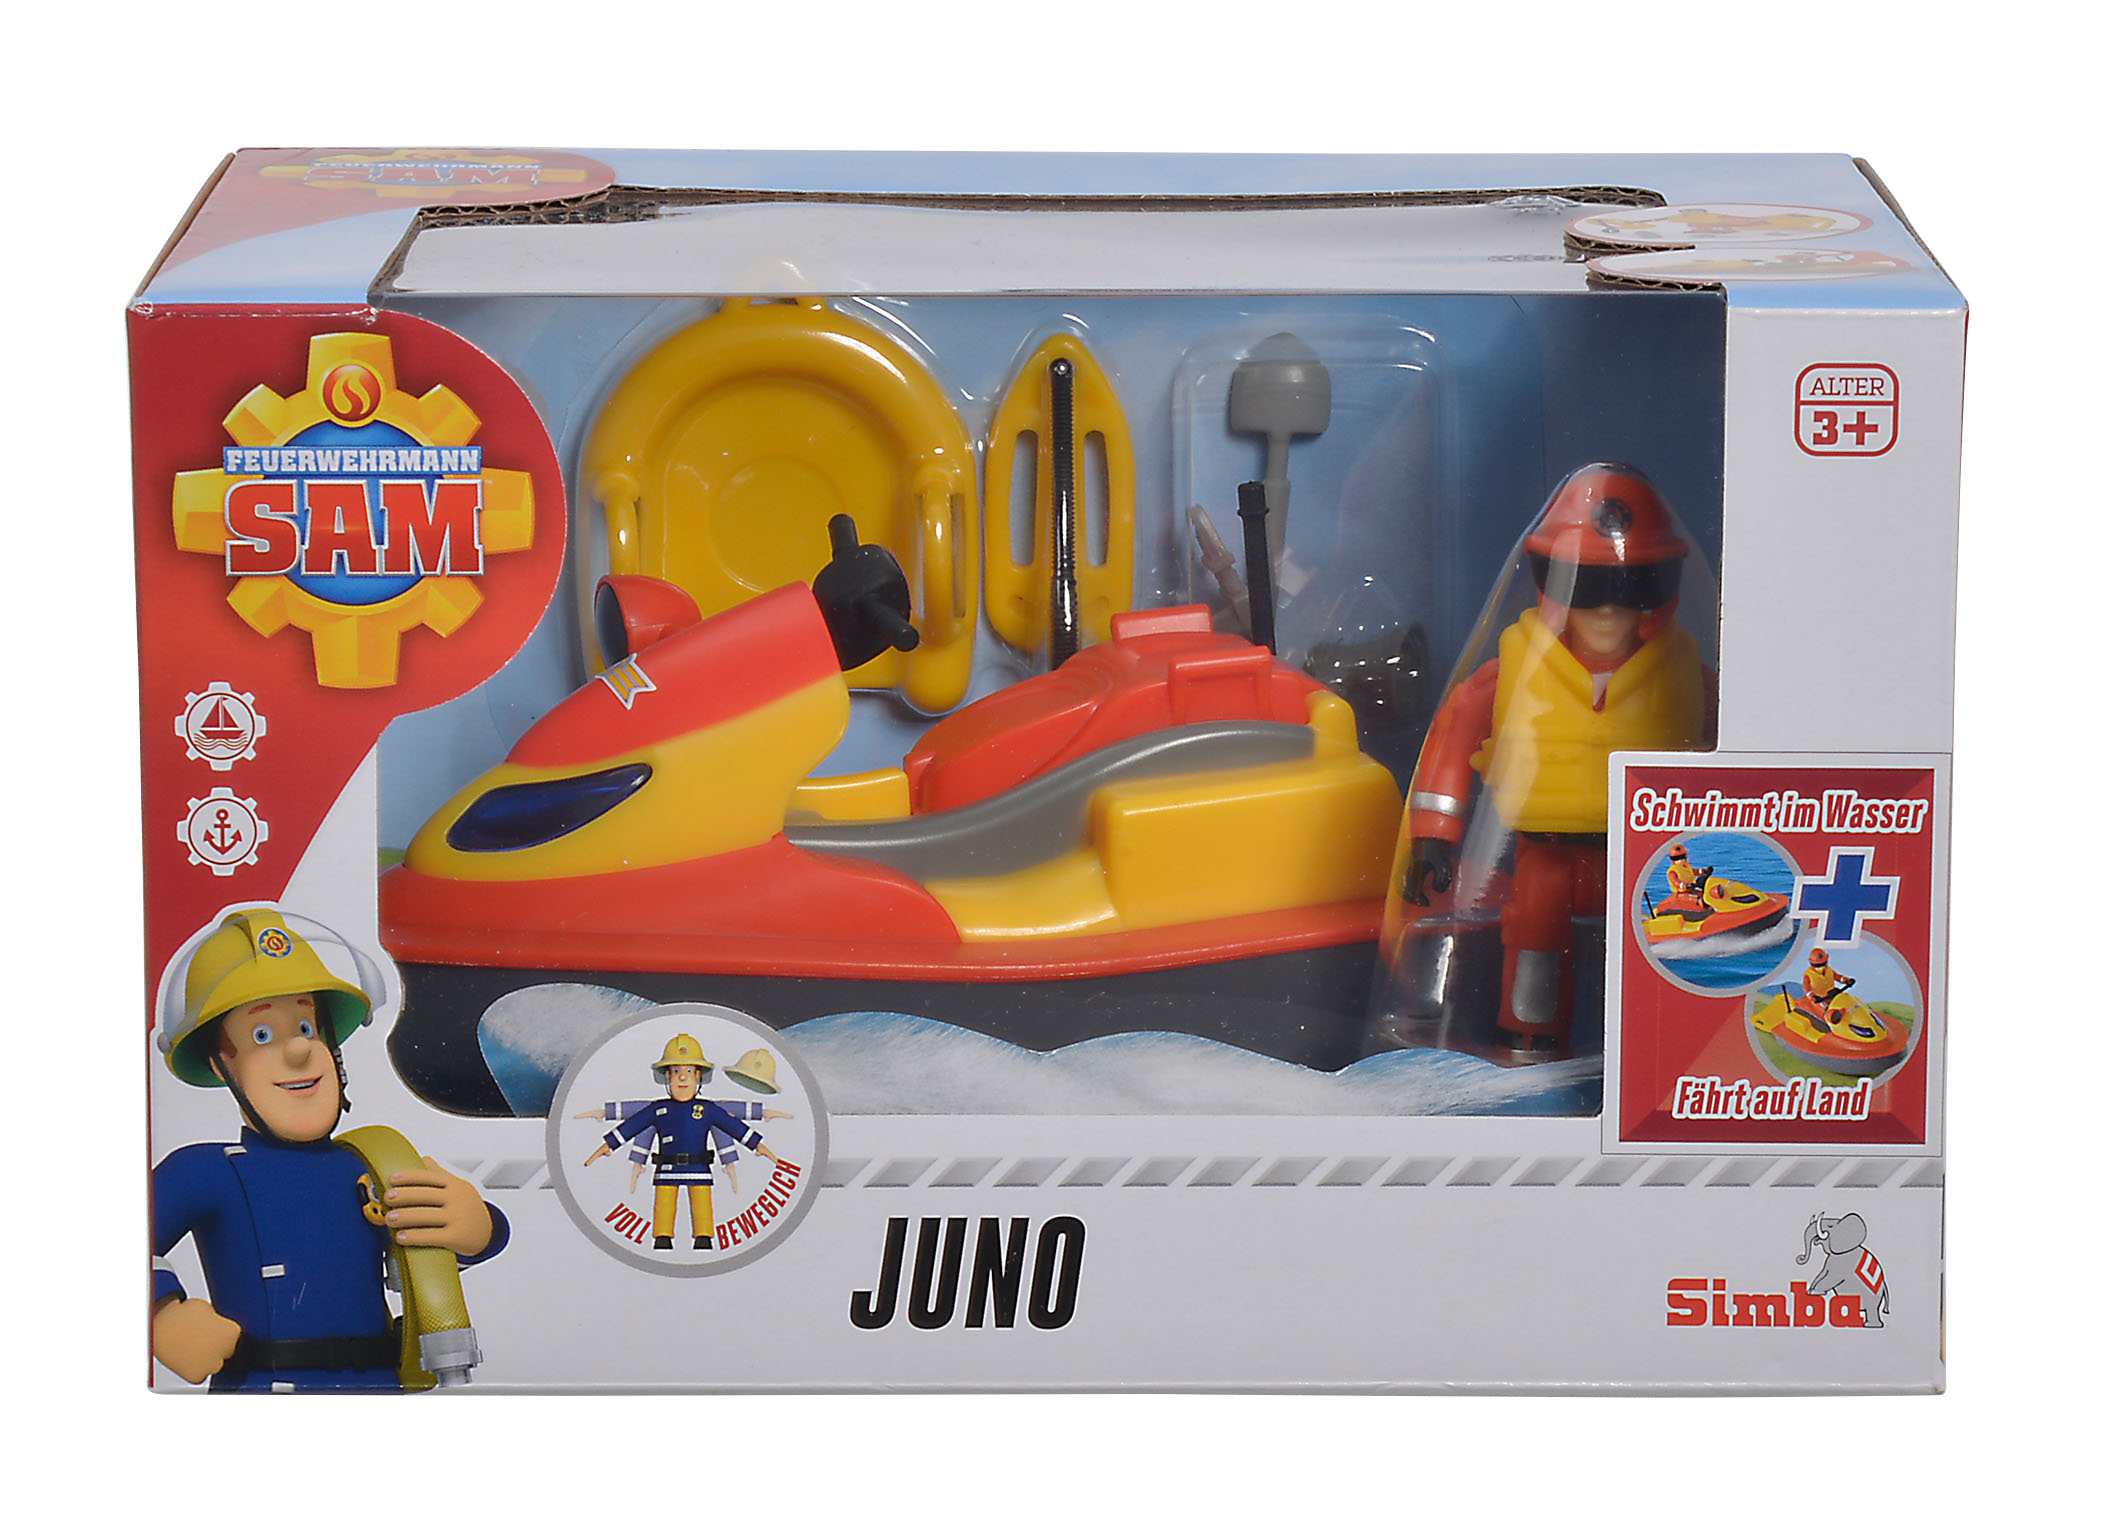 Mehrfarbig SIMBA Juno TOYS Sam Spielzeug Feuerwehrmann Ski Jet JetSki